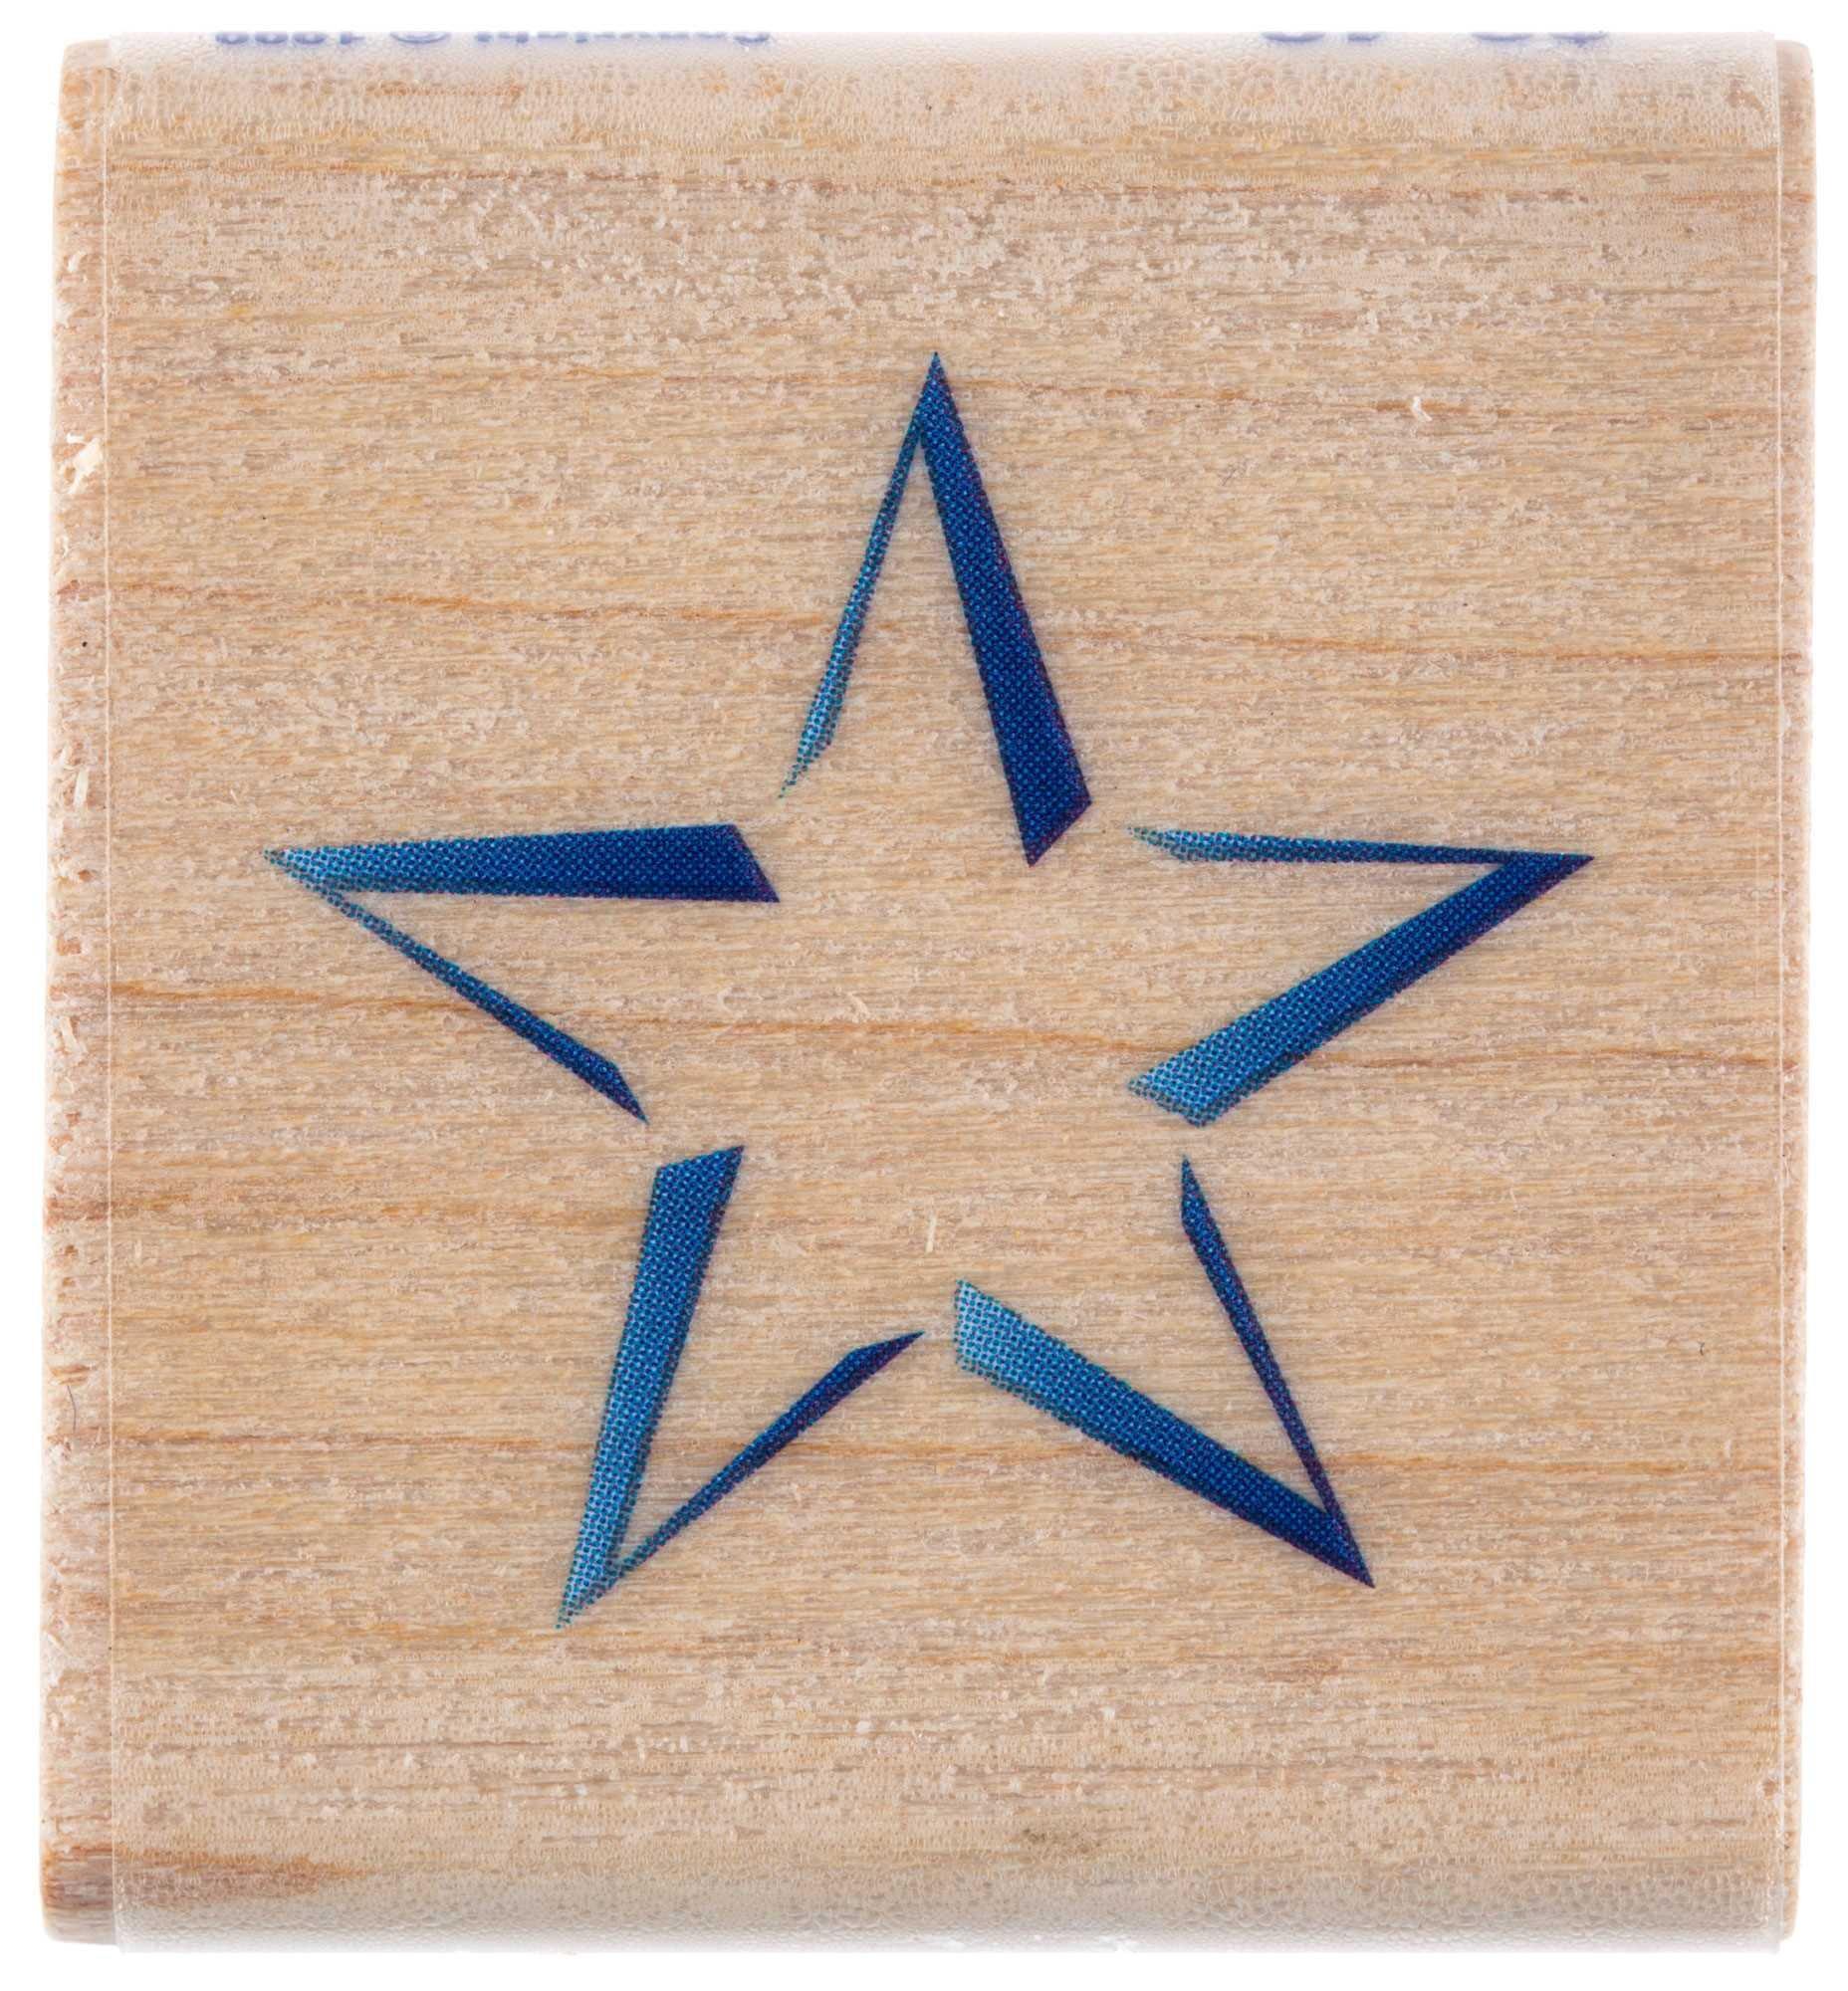 Star Rubber Stamp, Hobby Lobby